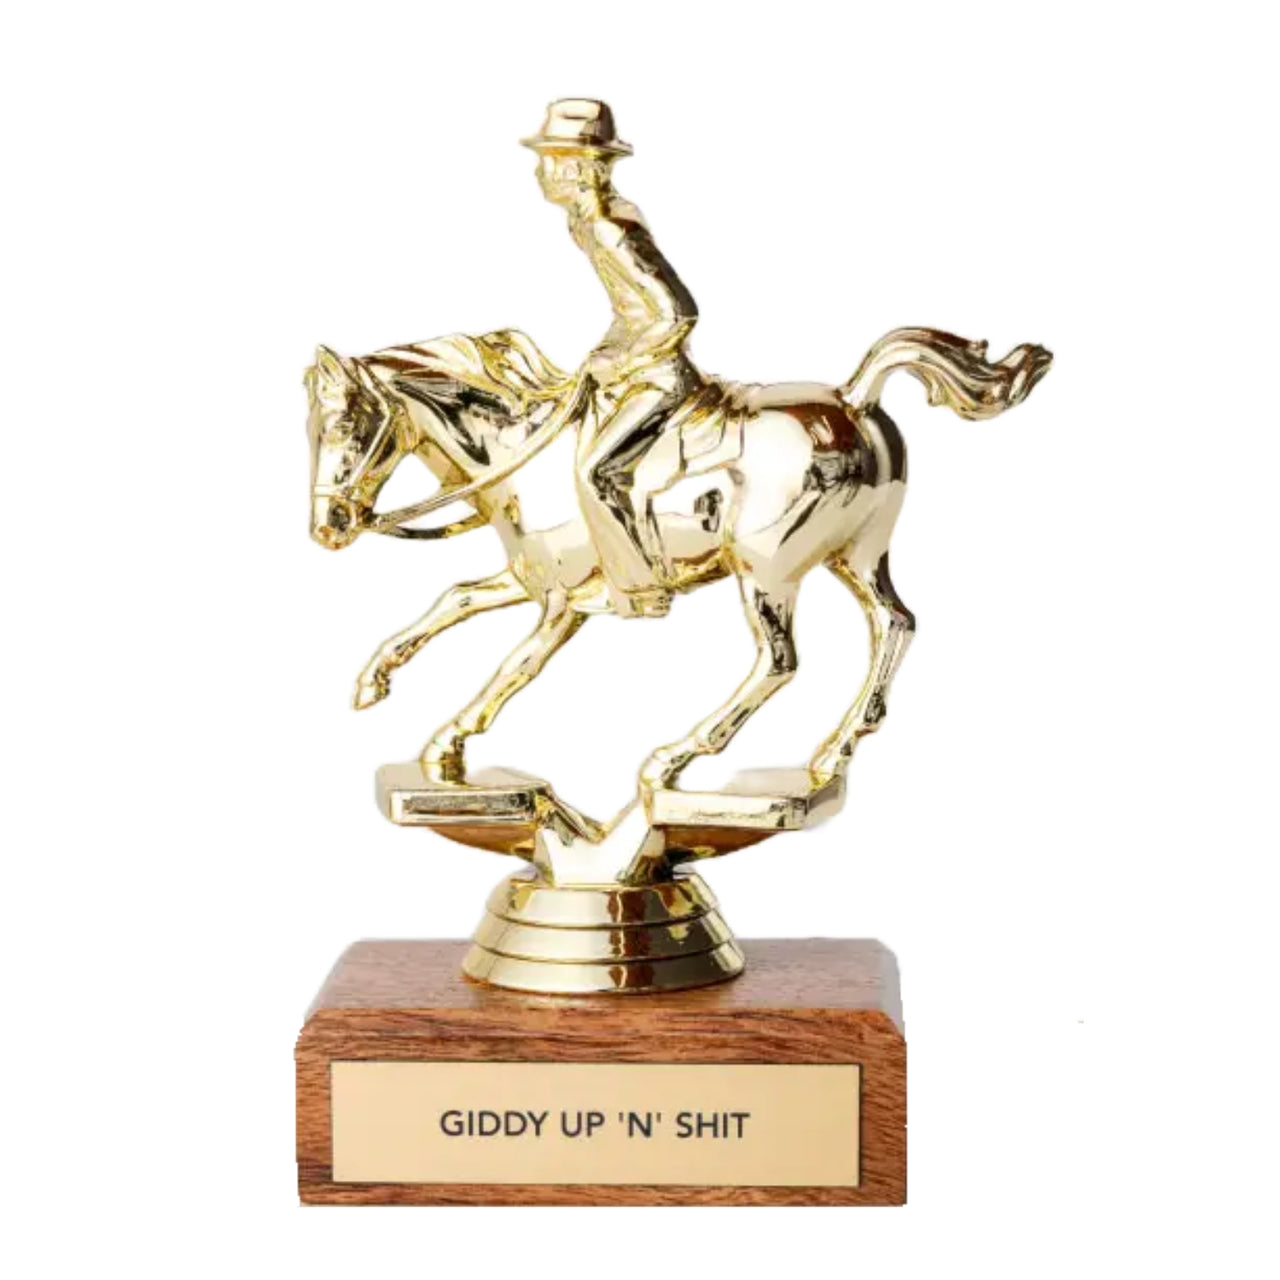 Giddy Up 'N' Shit Trophy